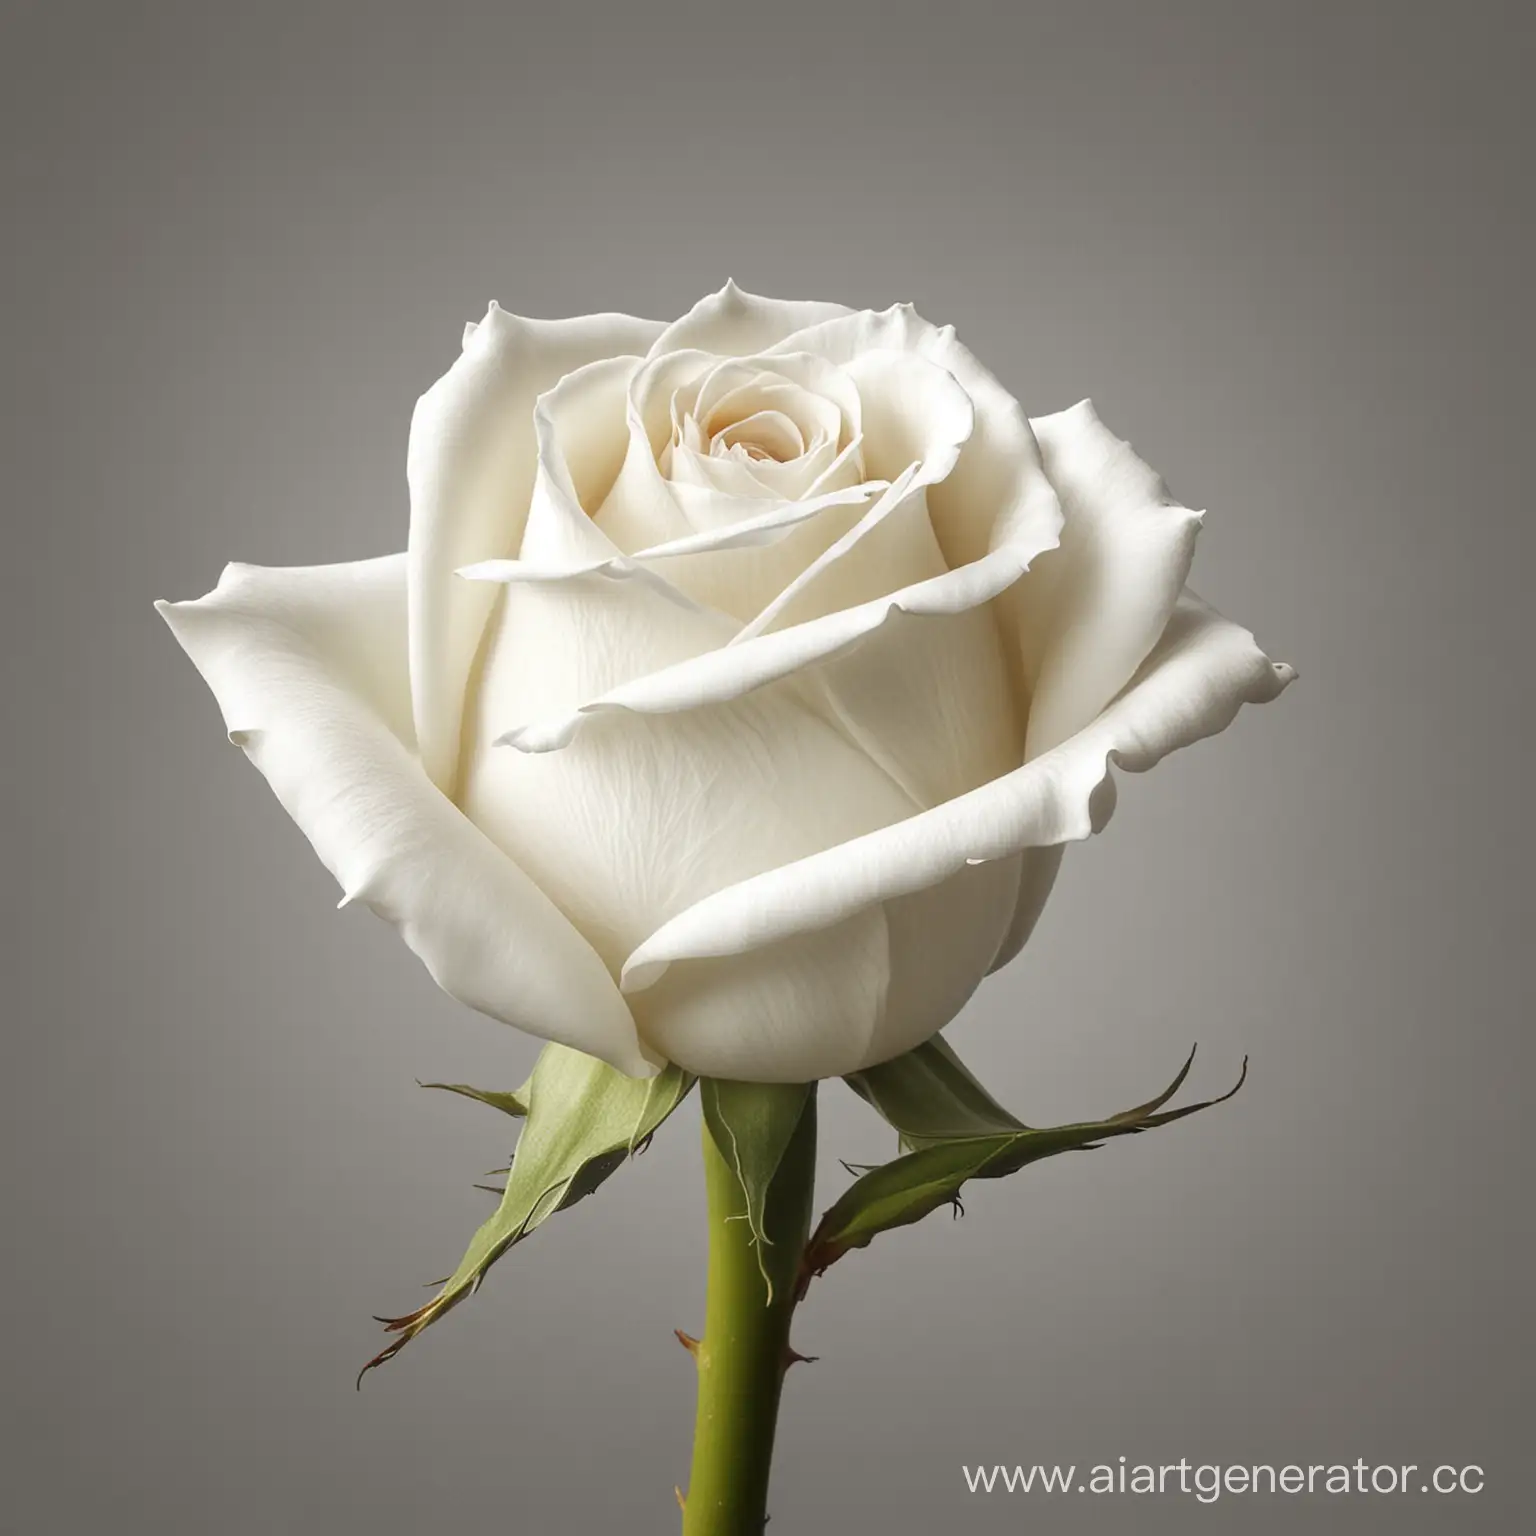 draw a lush white rose bud